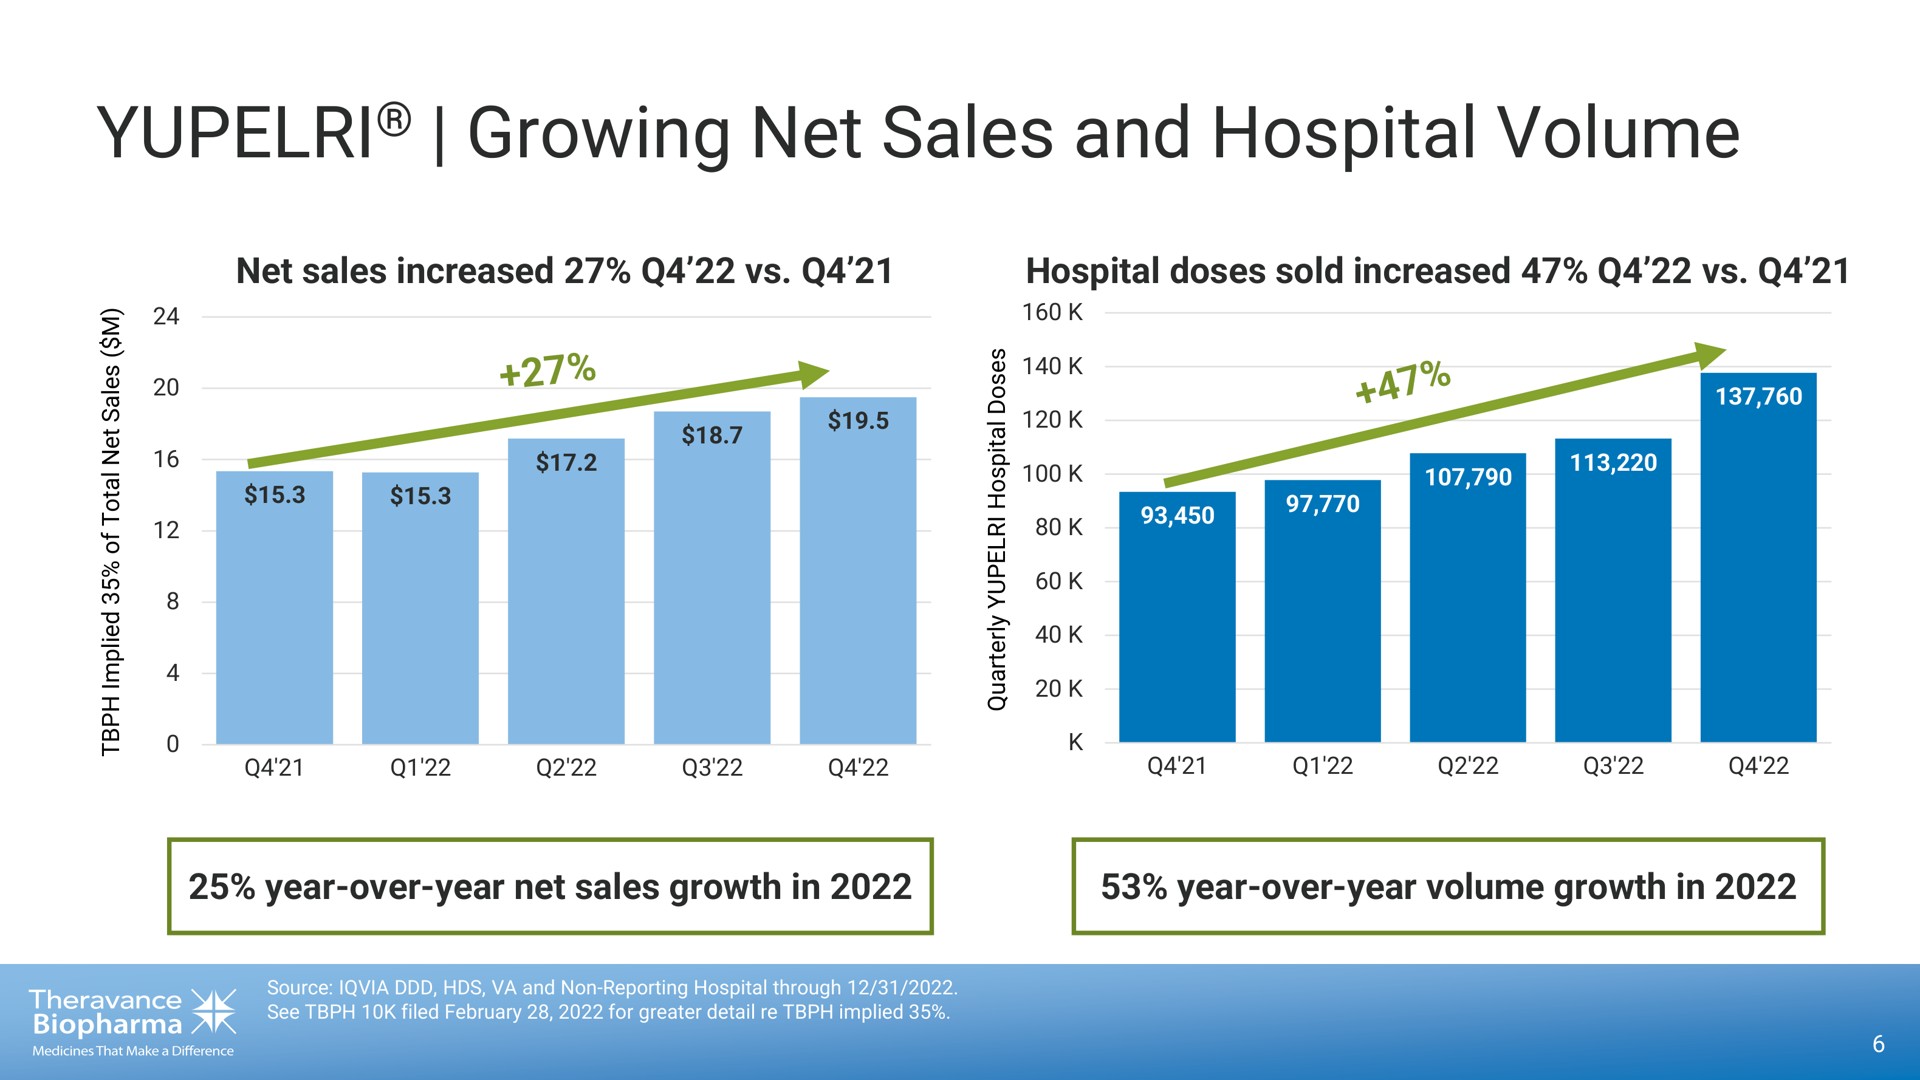 growing net sales and hospital volume | Theravance Biopharma